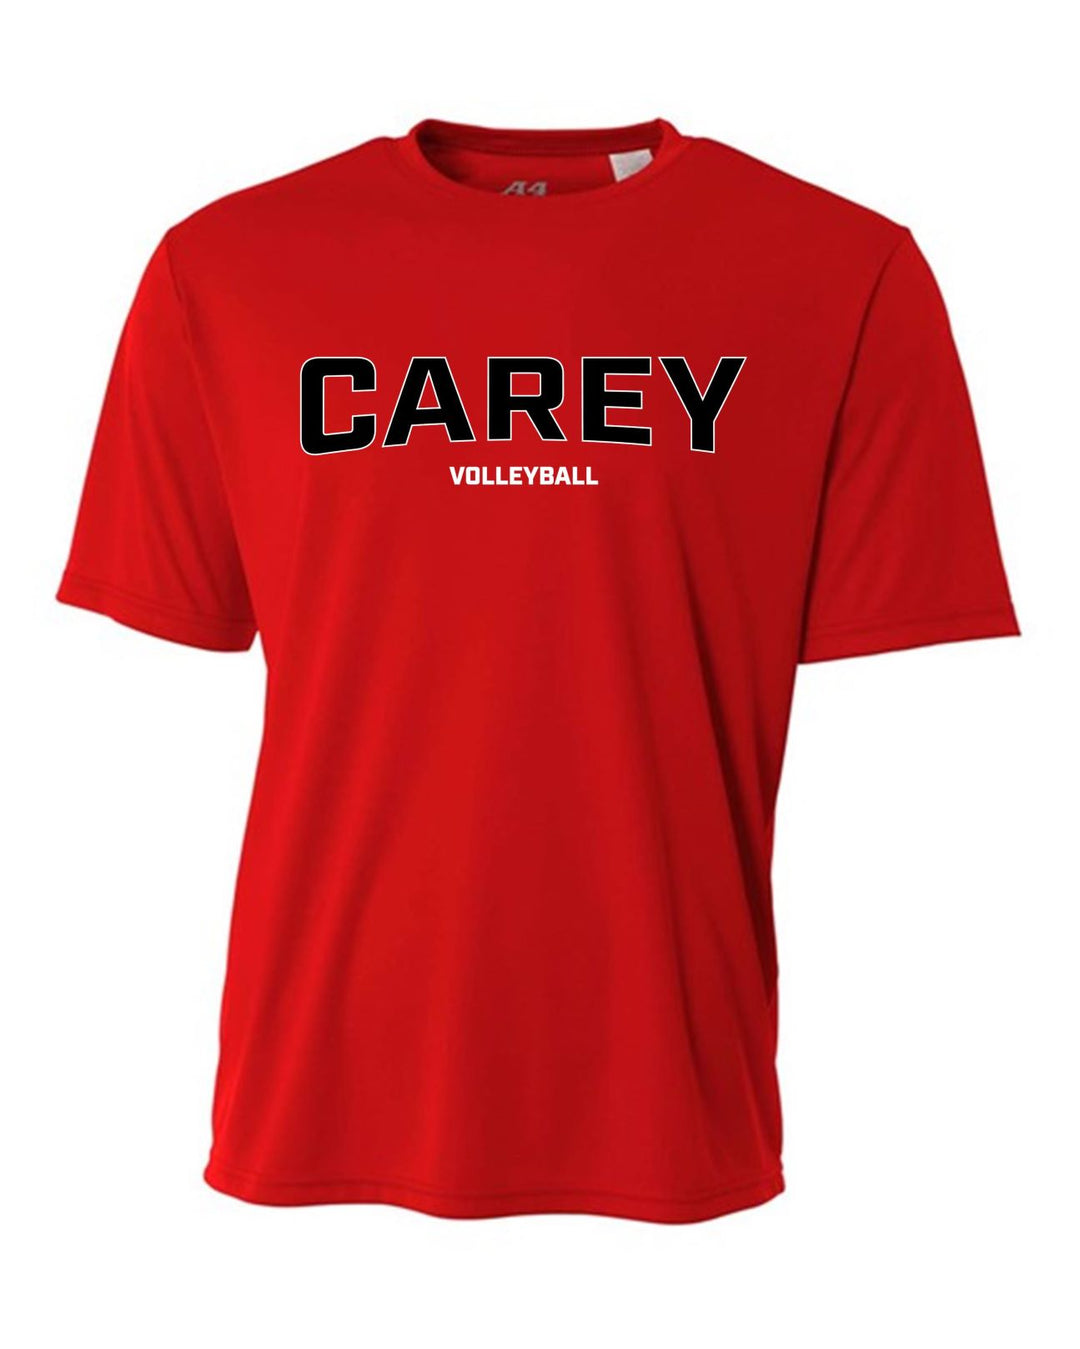 WCU Volleyball Men's Short-Sleeve Performance Shirt WCU Volleyball Red CAREY - Third Coast Soccer